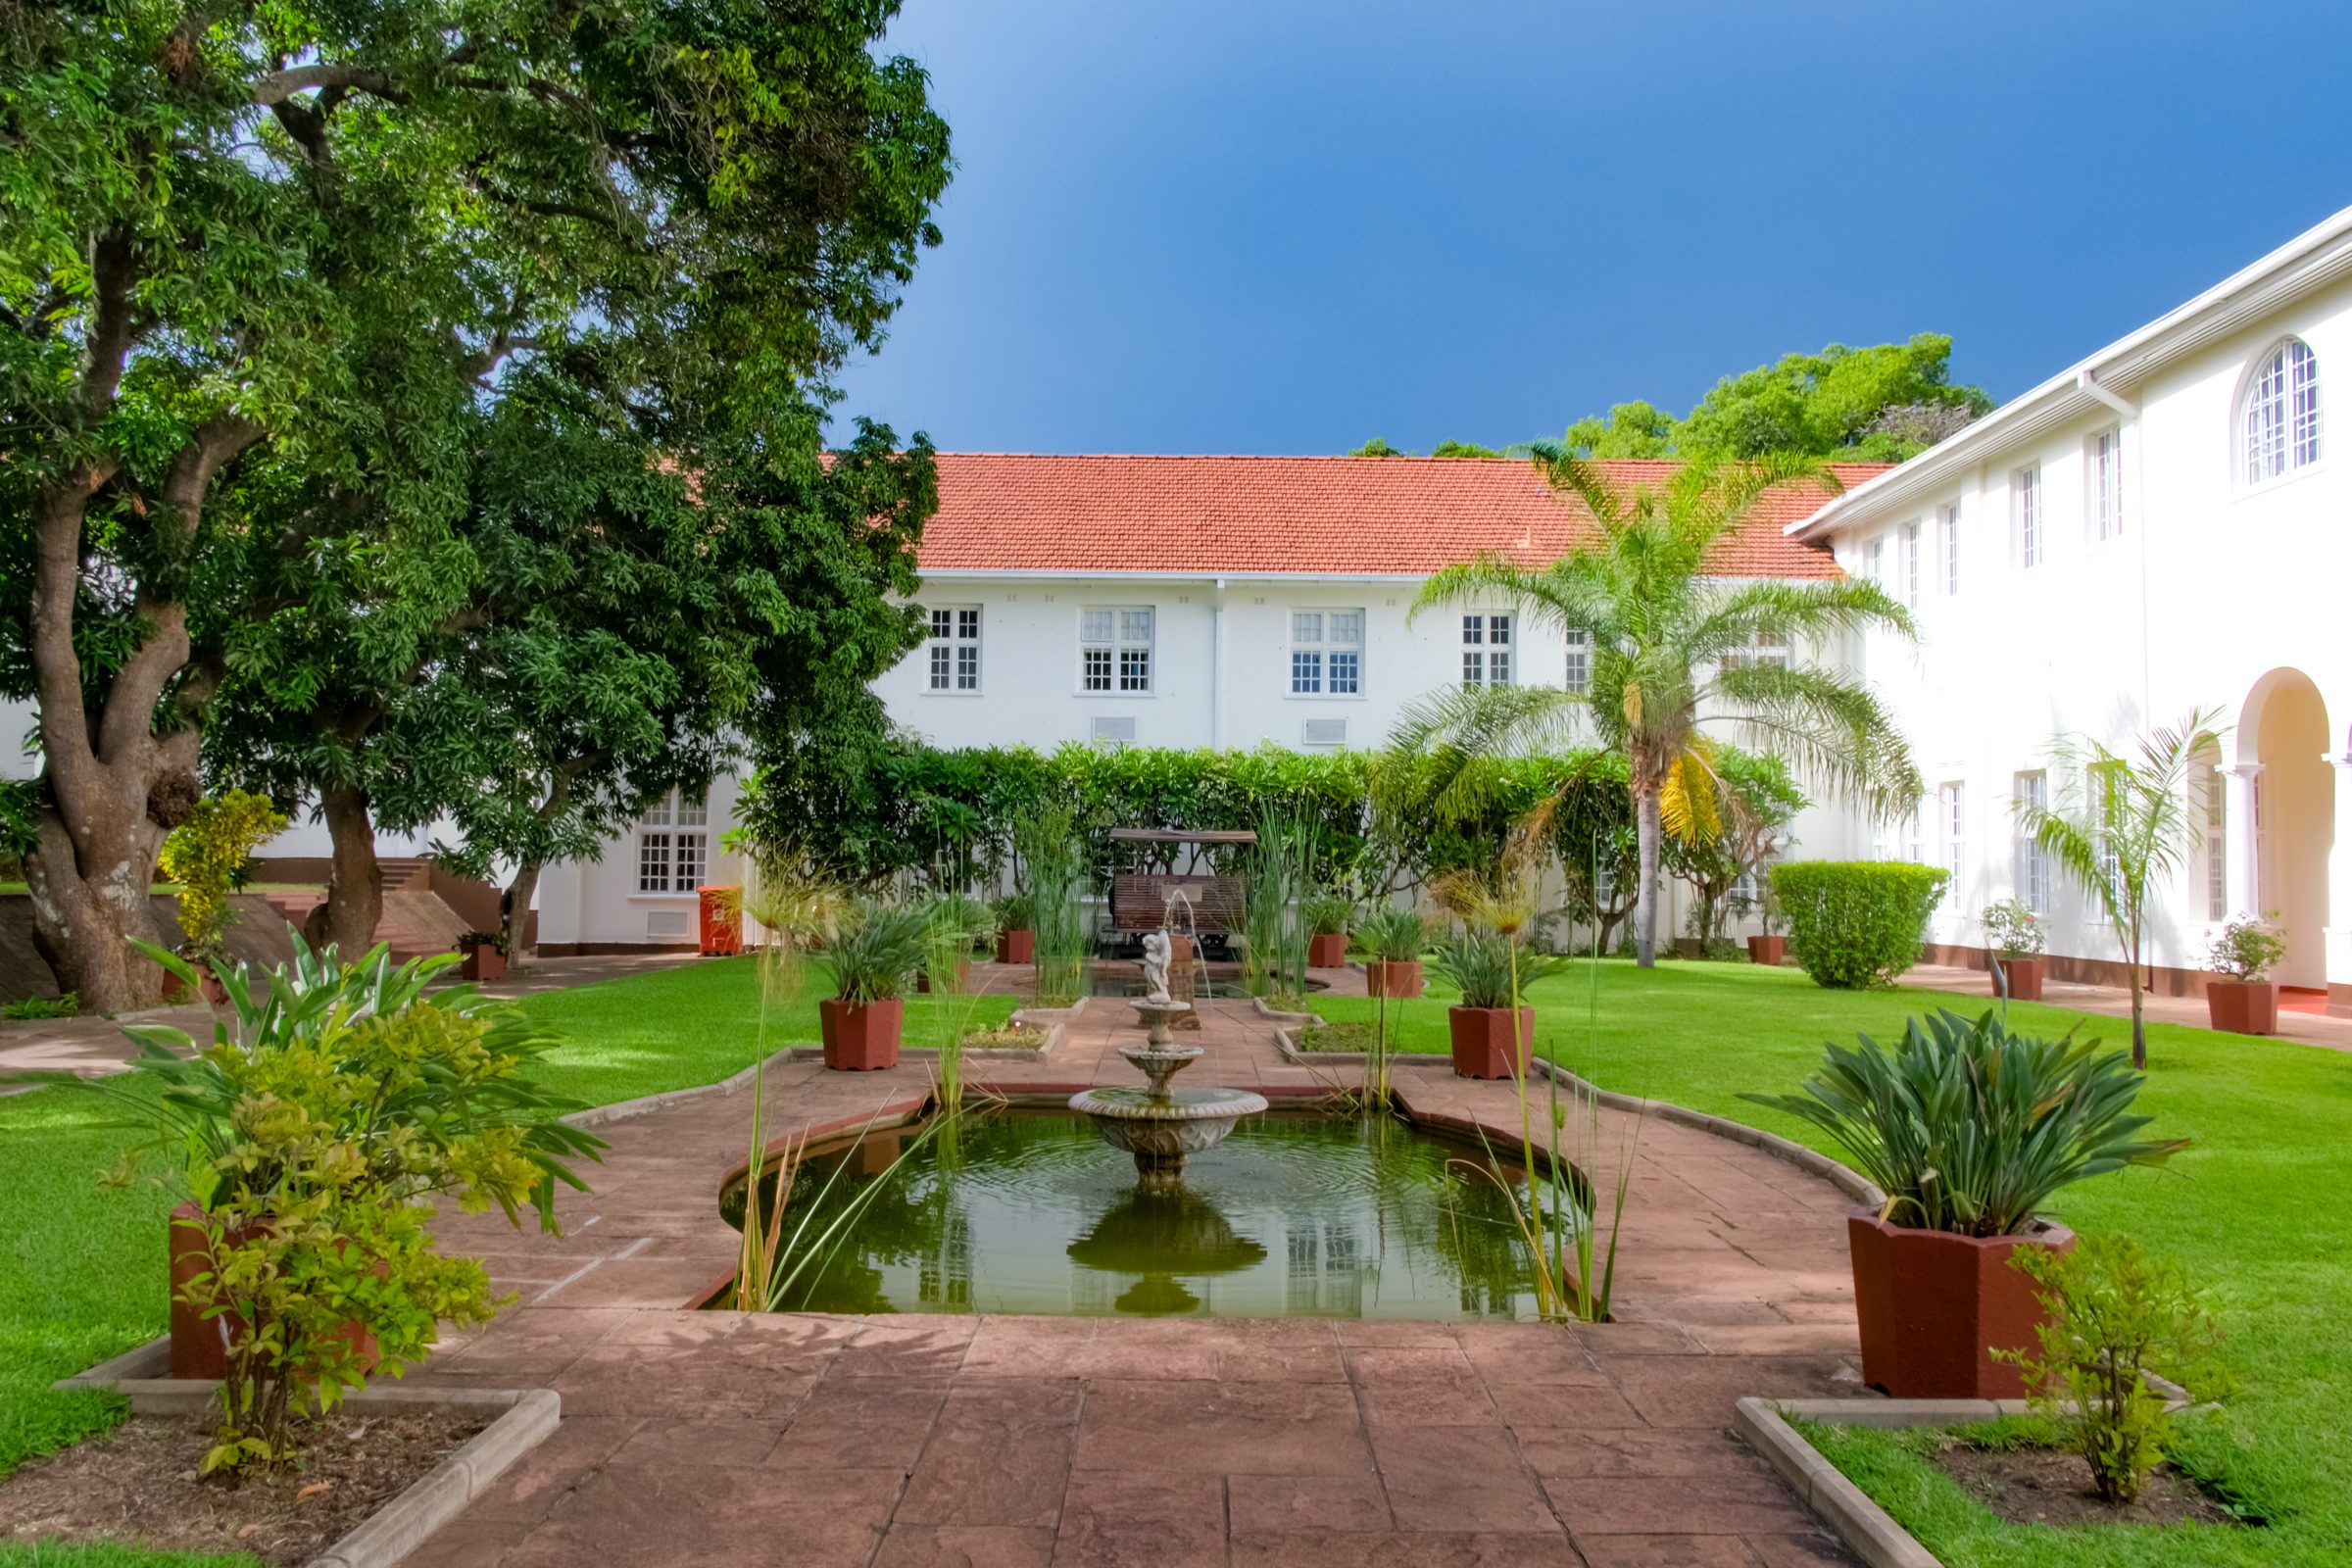 The courtyard garden of the Victoria Falls Hotel